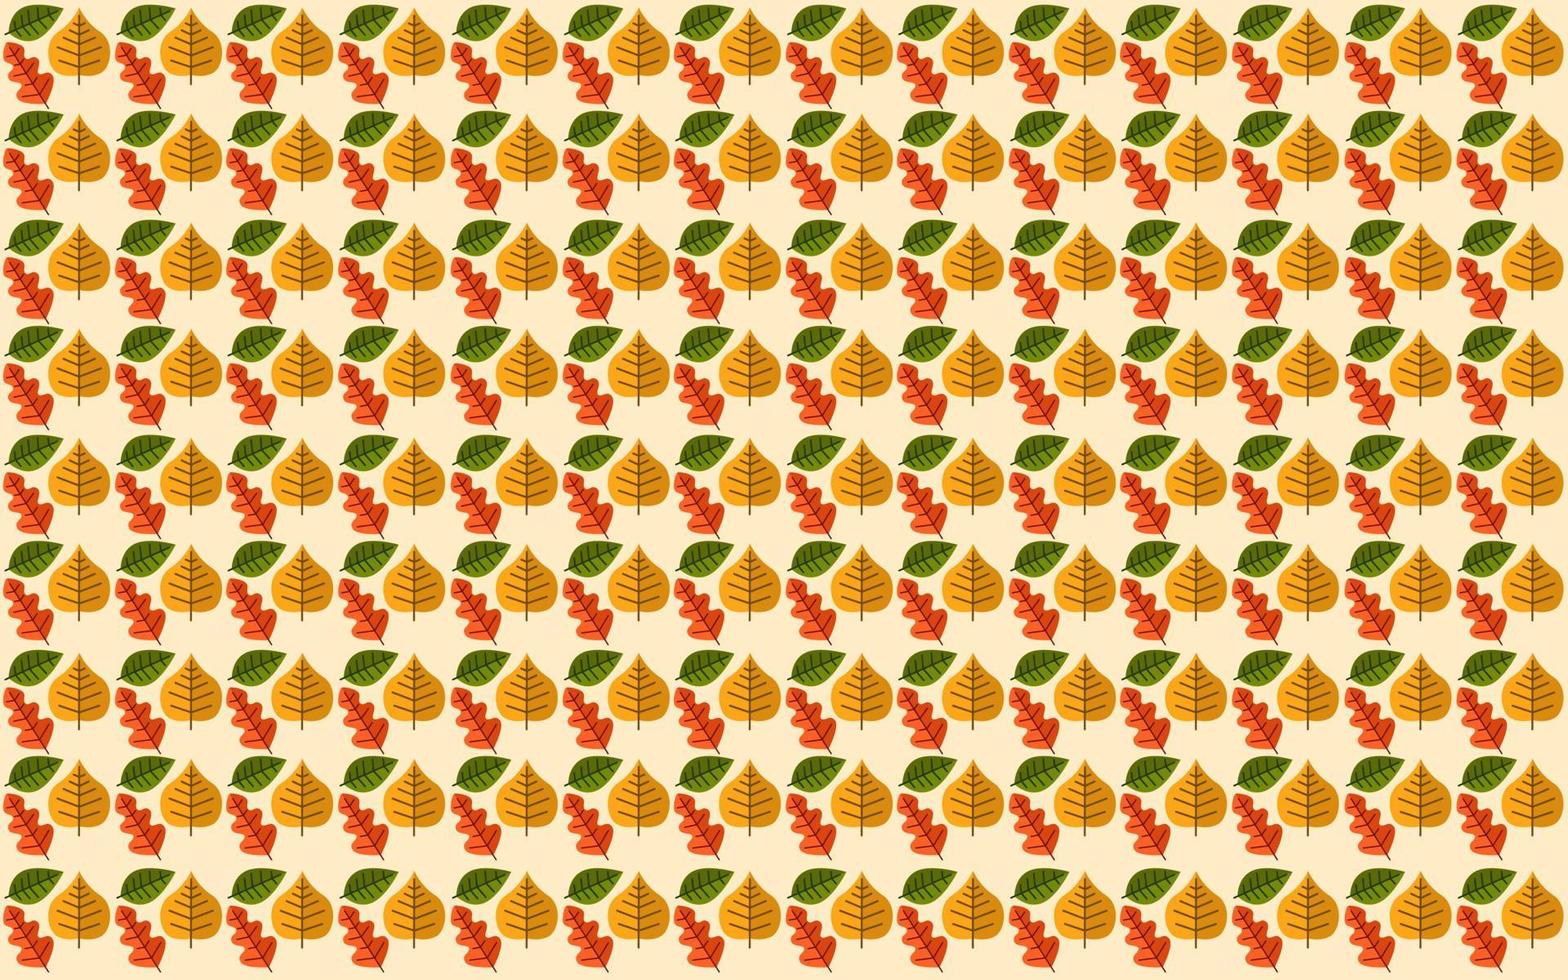 background design with leaf pattern. autumn pattern background design. vector